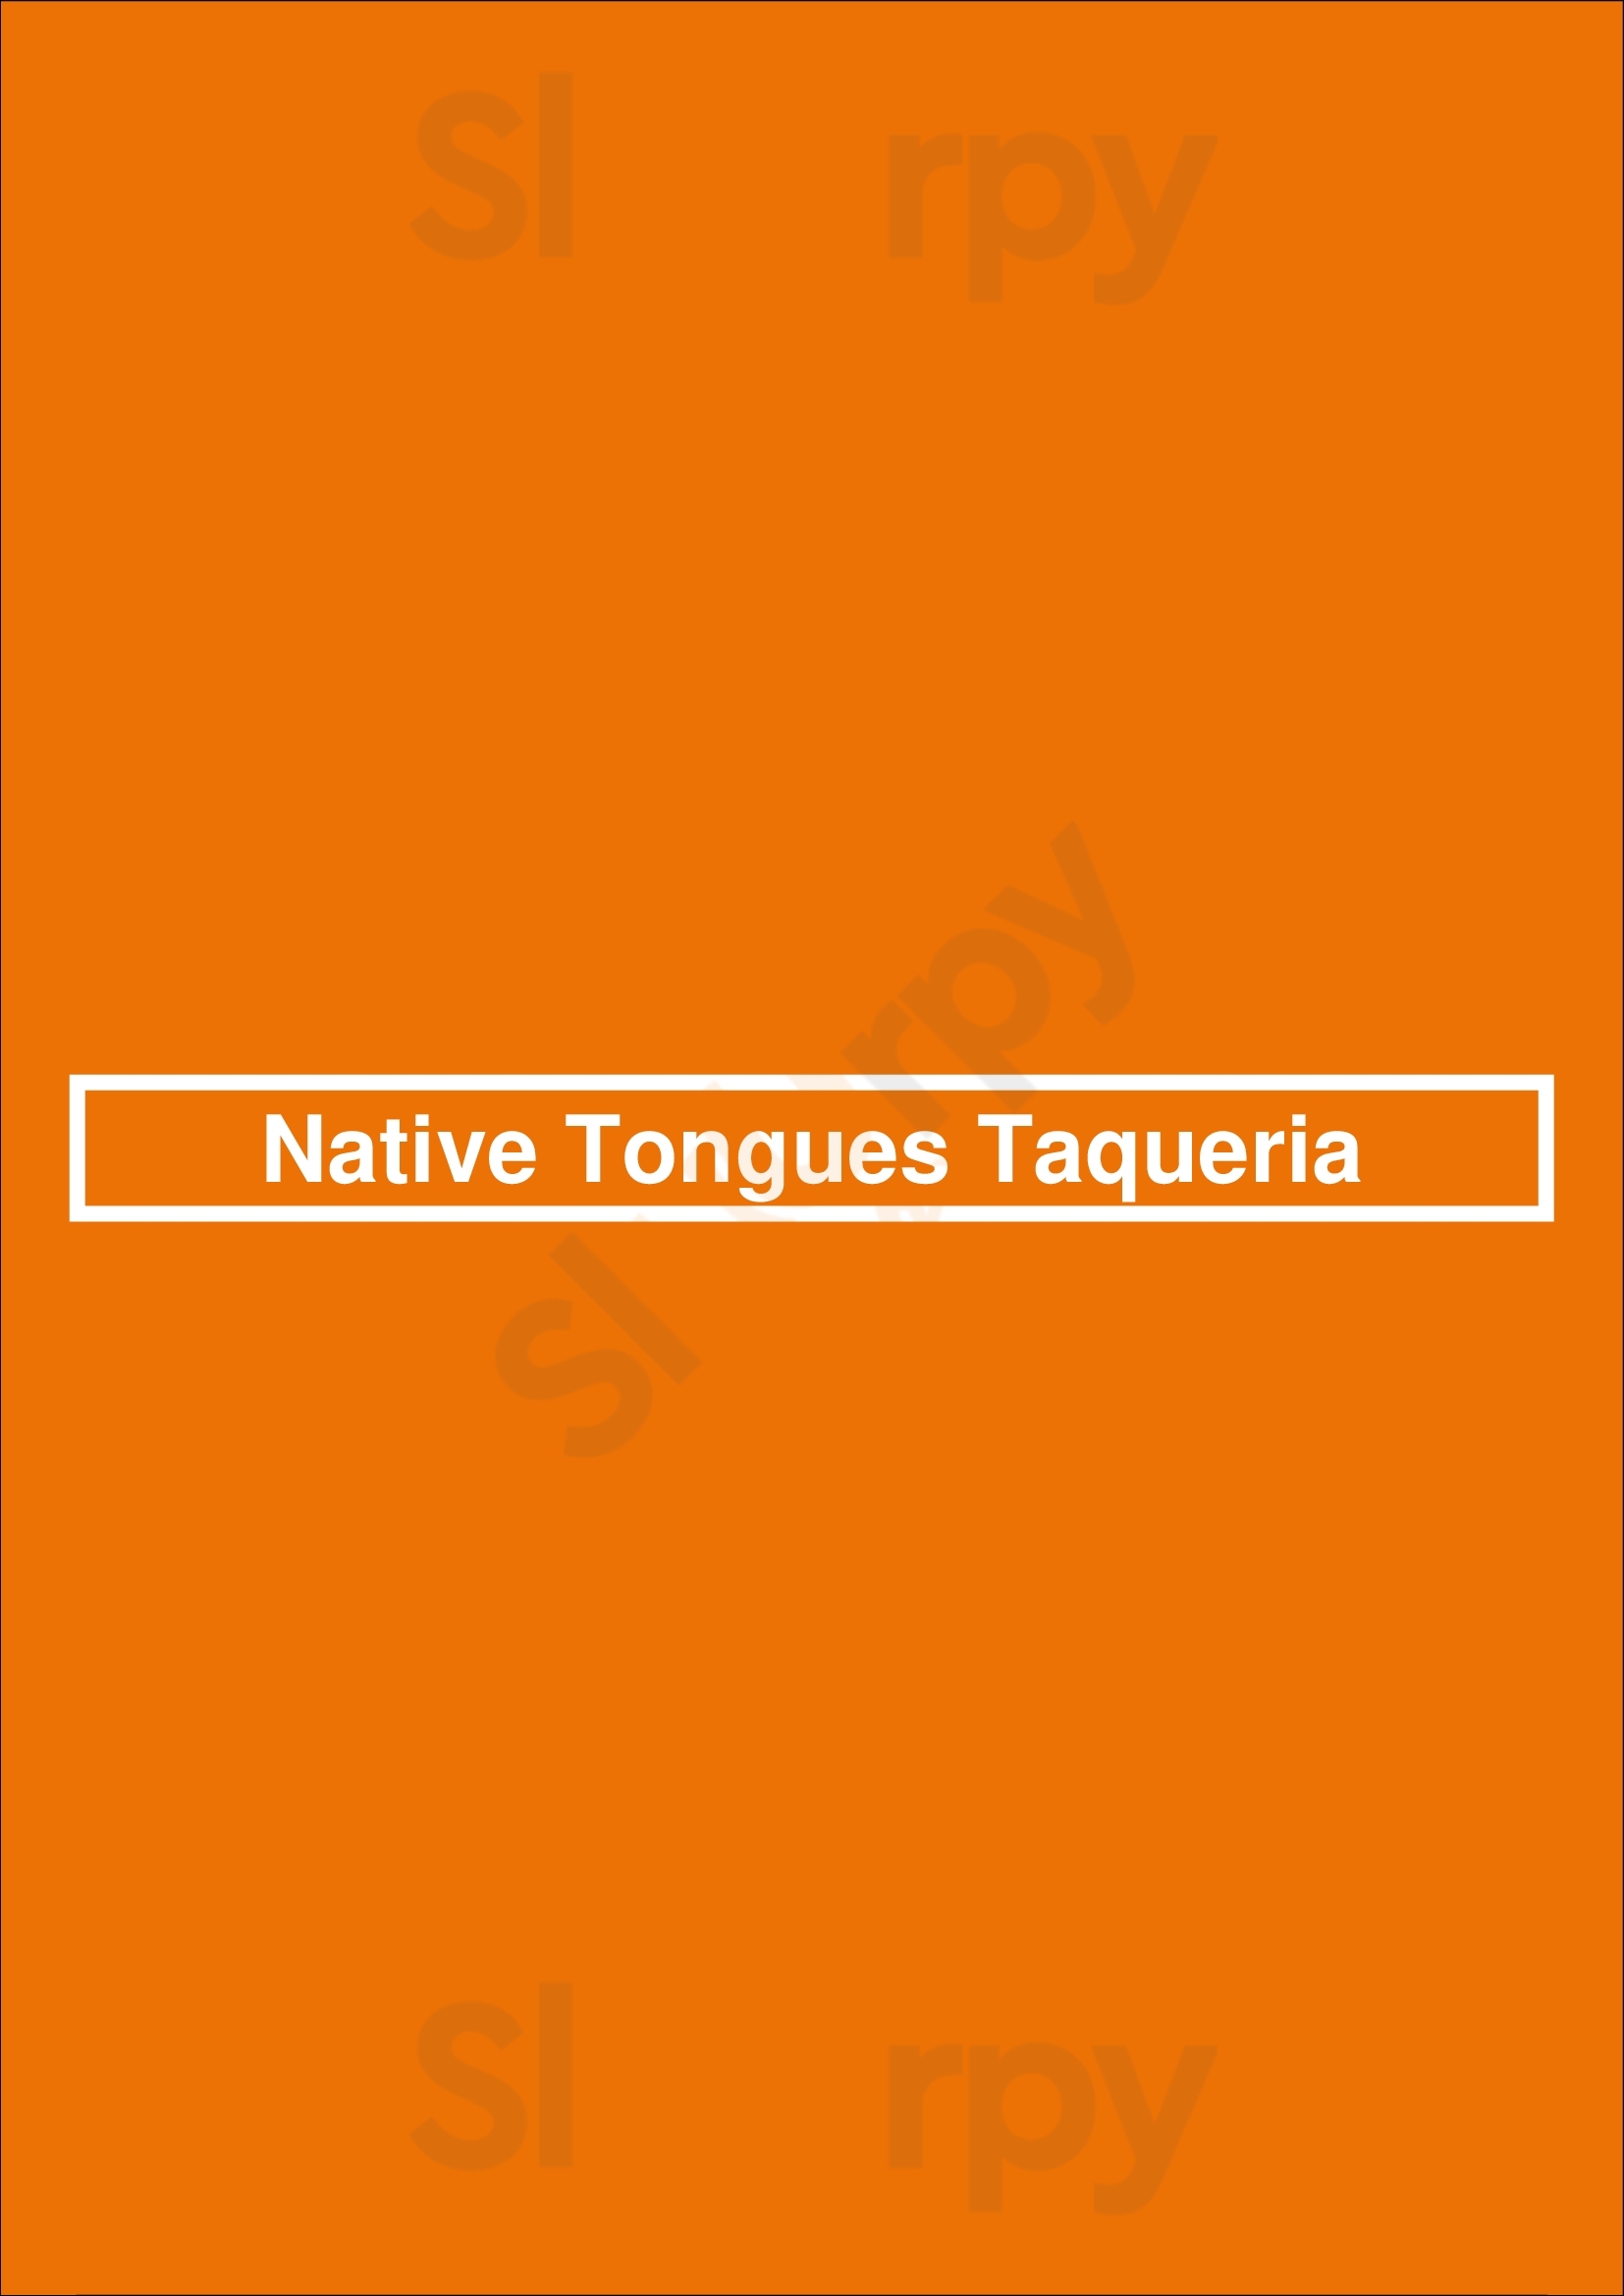 Native Tongues Taqueria Calgary Menu - 1